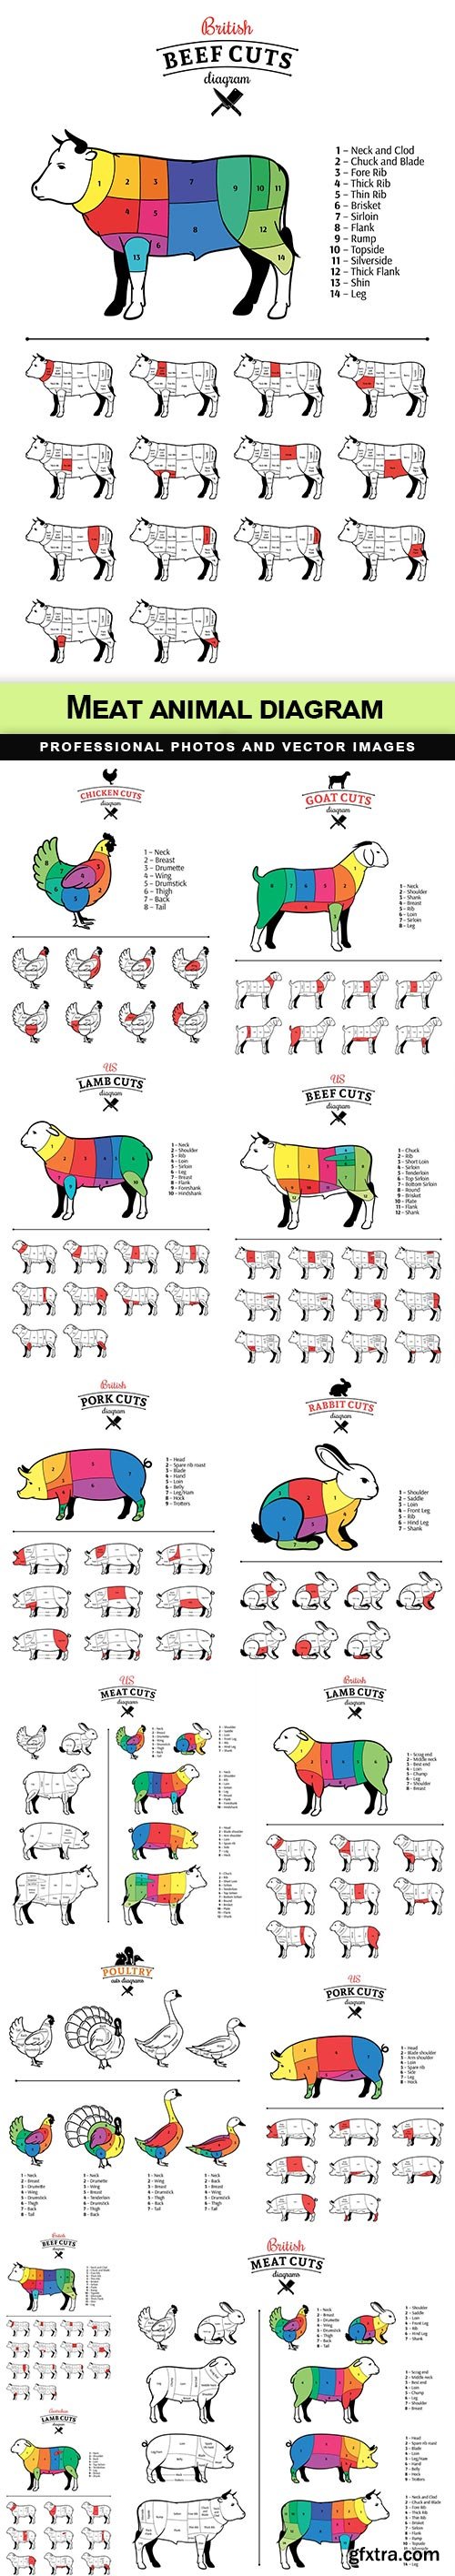 Meat animal diagram